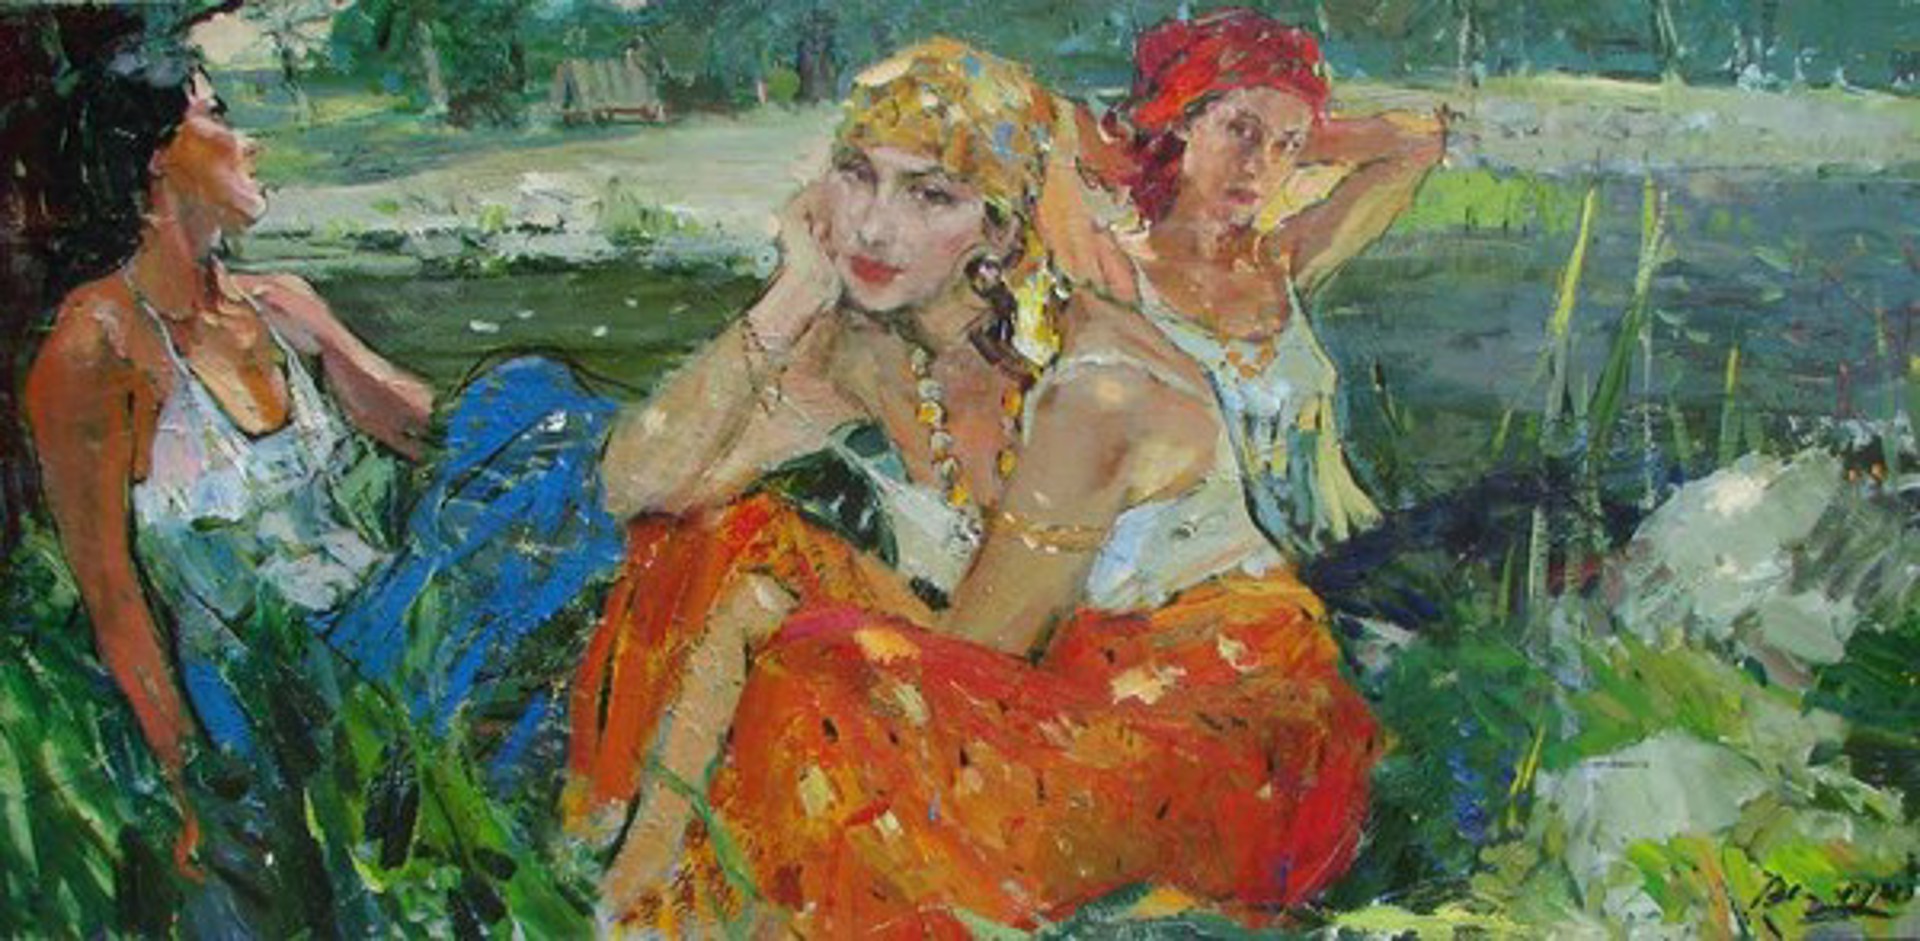 Gypsies by Renat Ramazanov